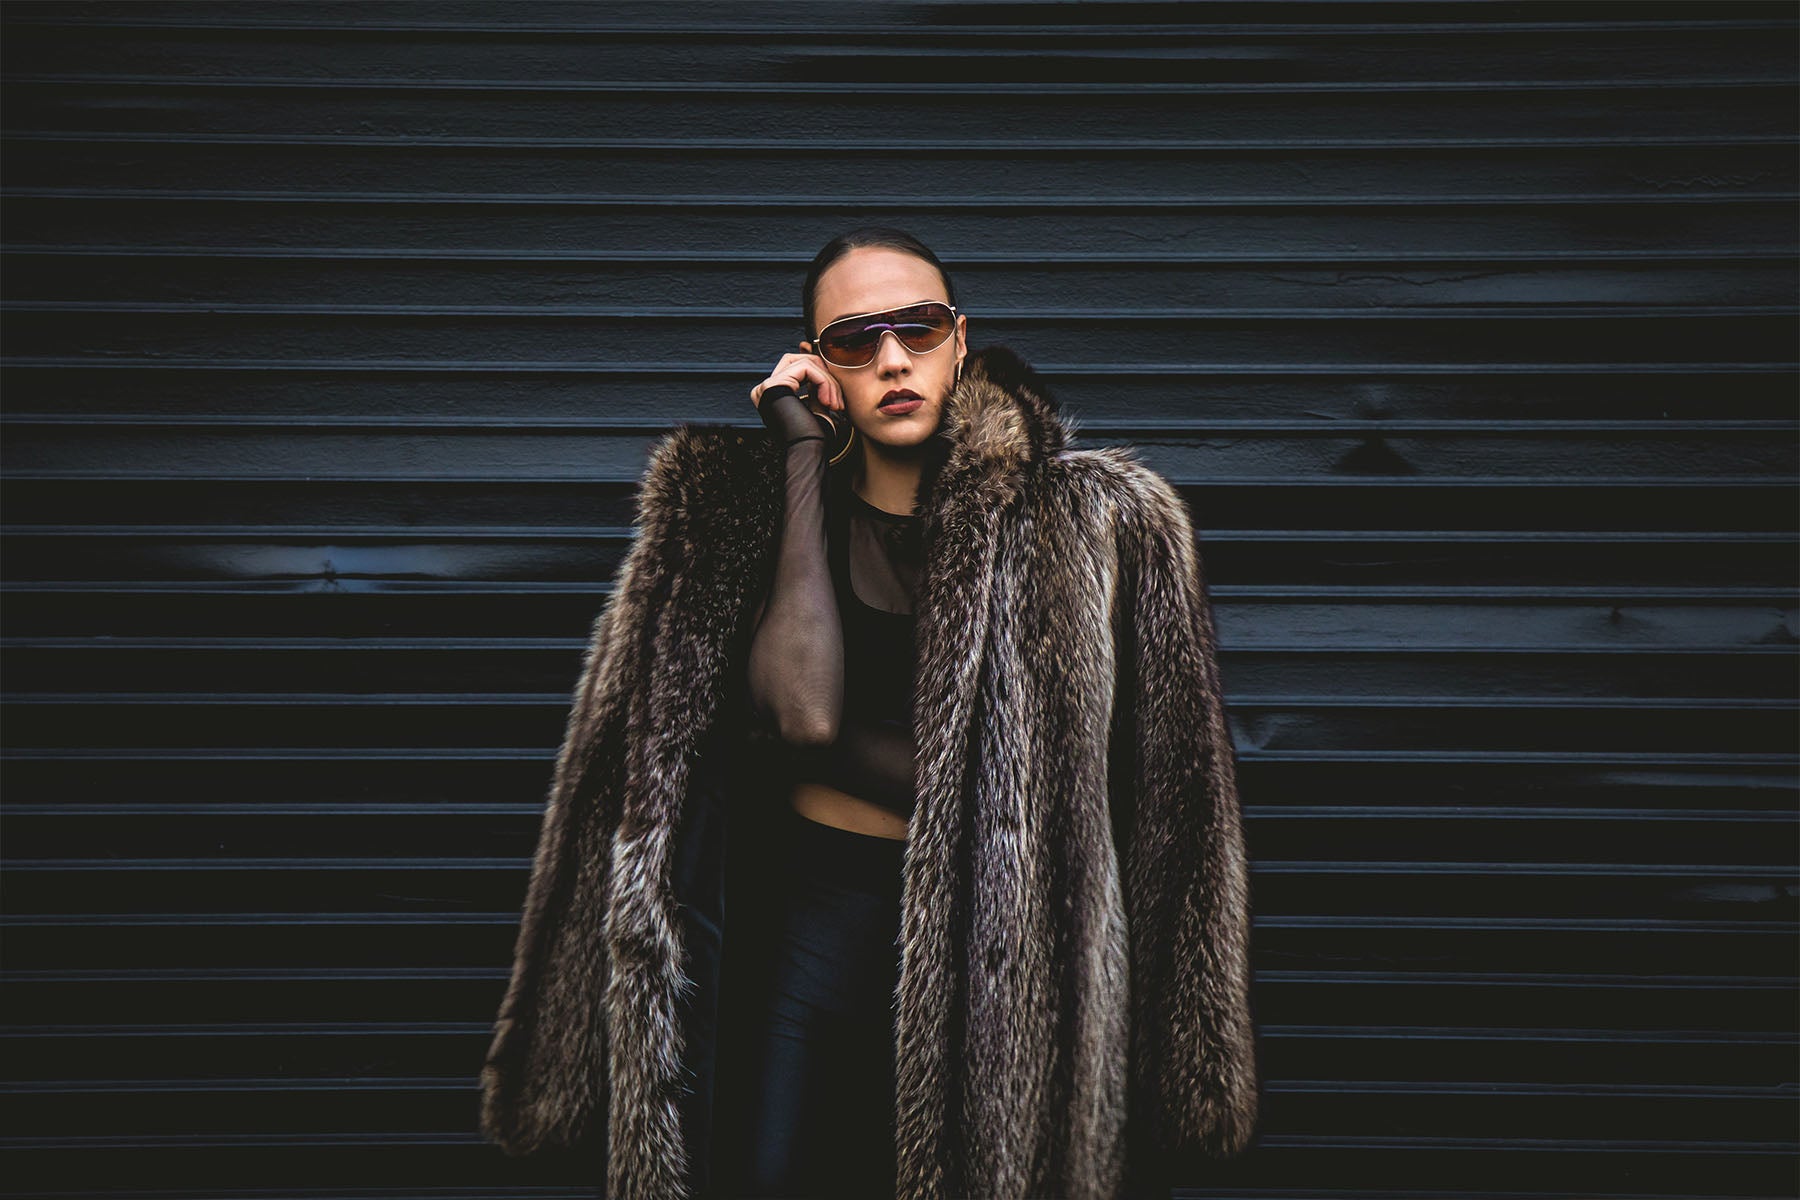 woman wearing faux fur coat and sunglasses